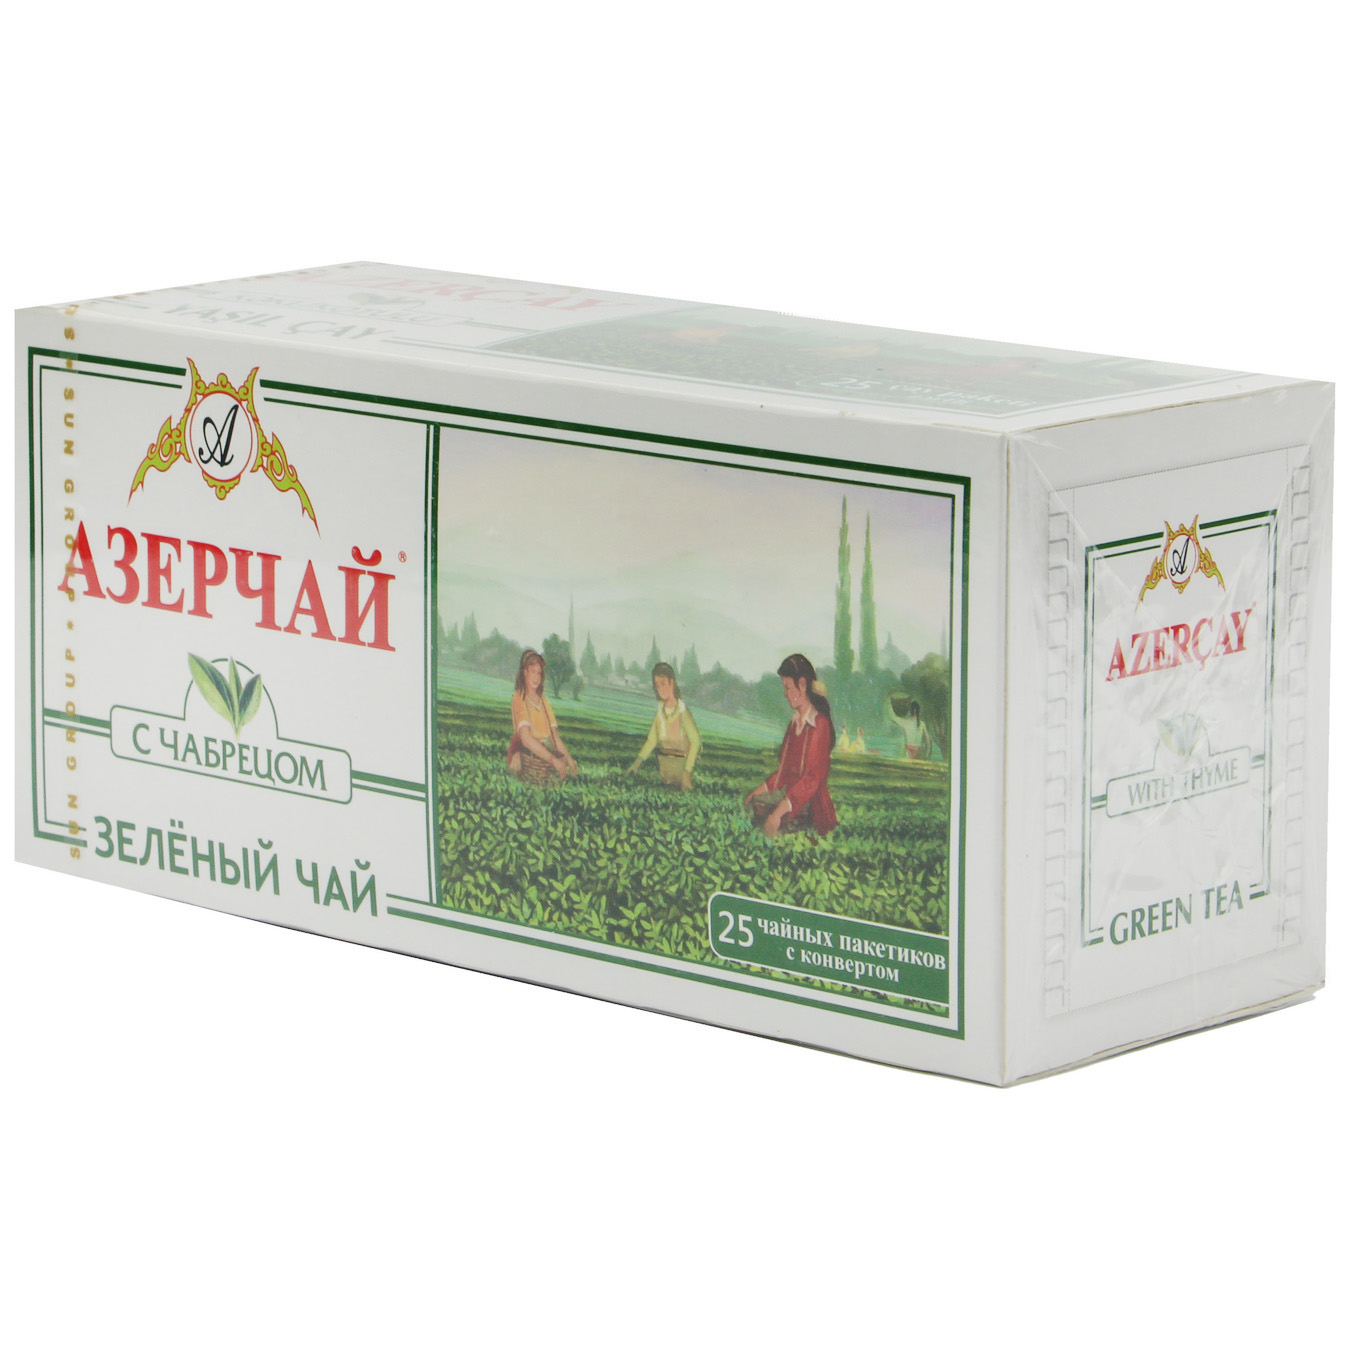 Azercay With Thyme Green Tea 25pcs 2g 2